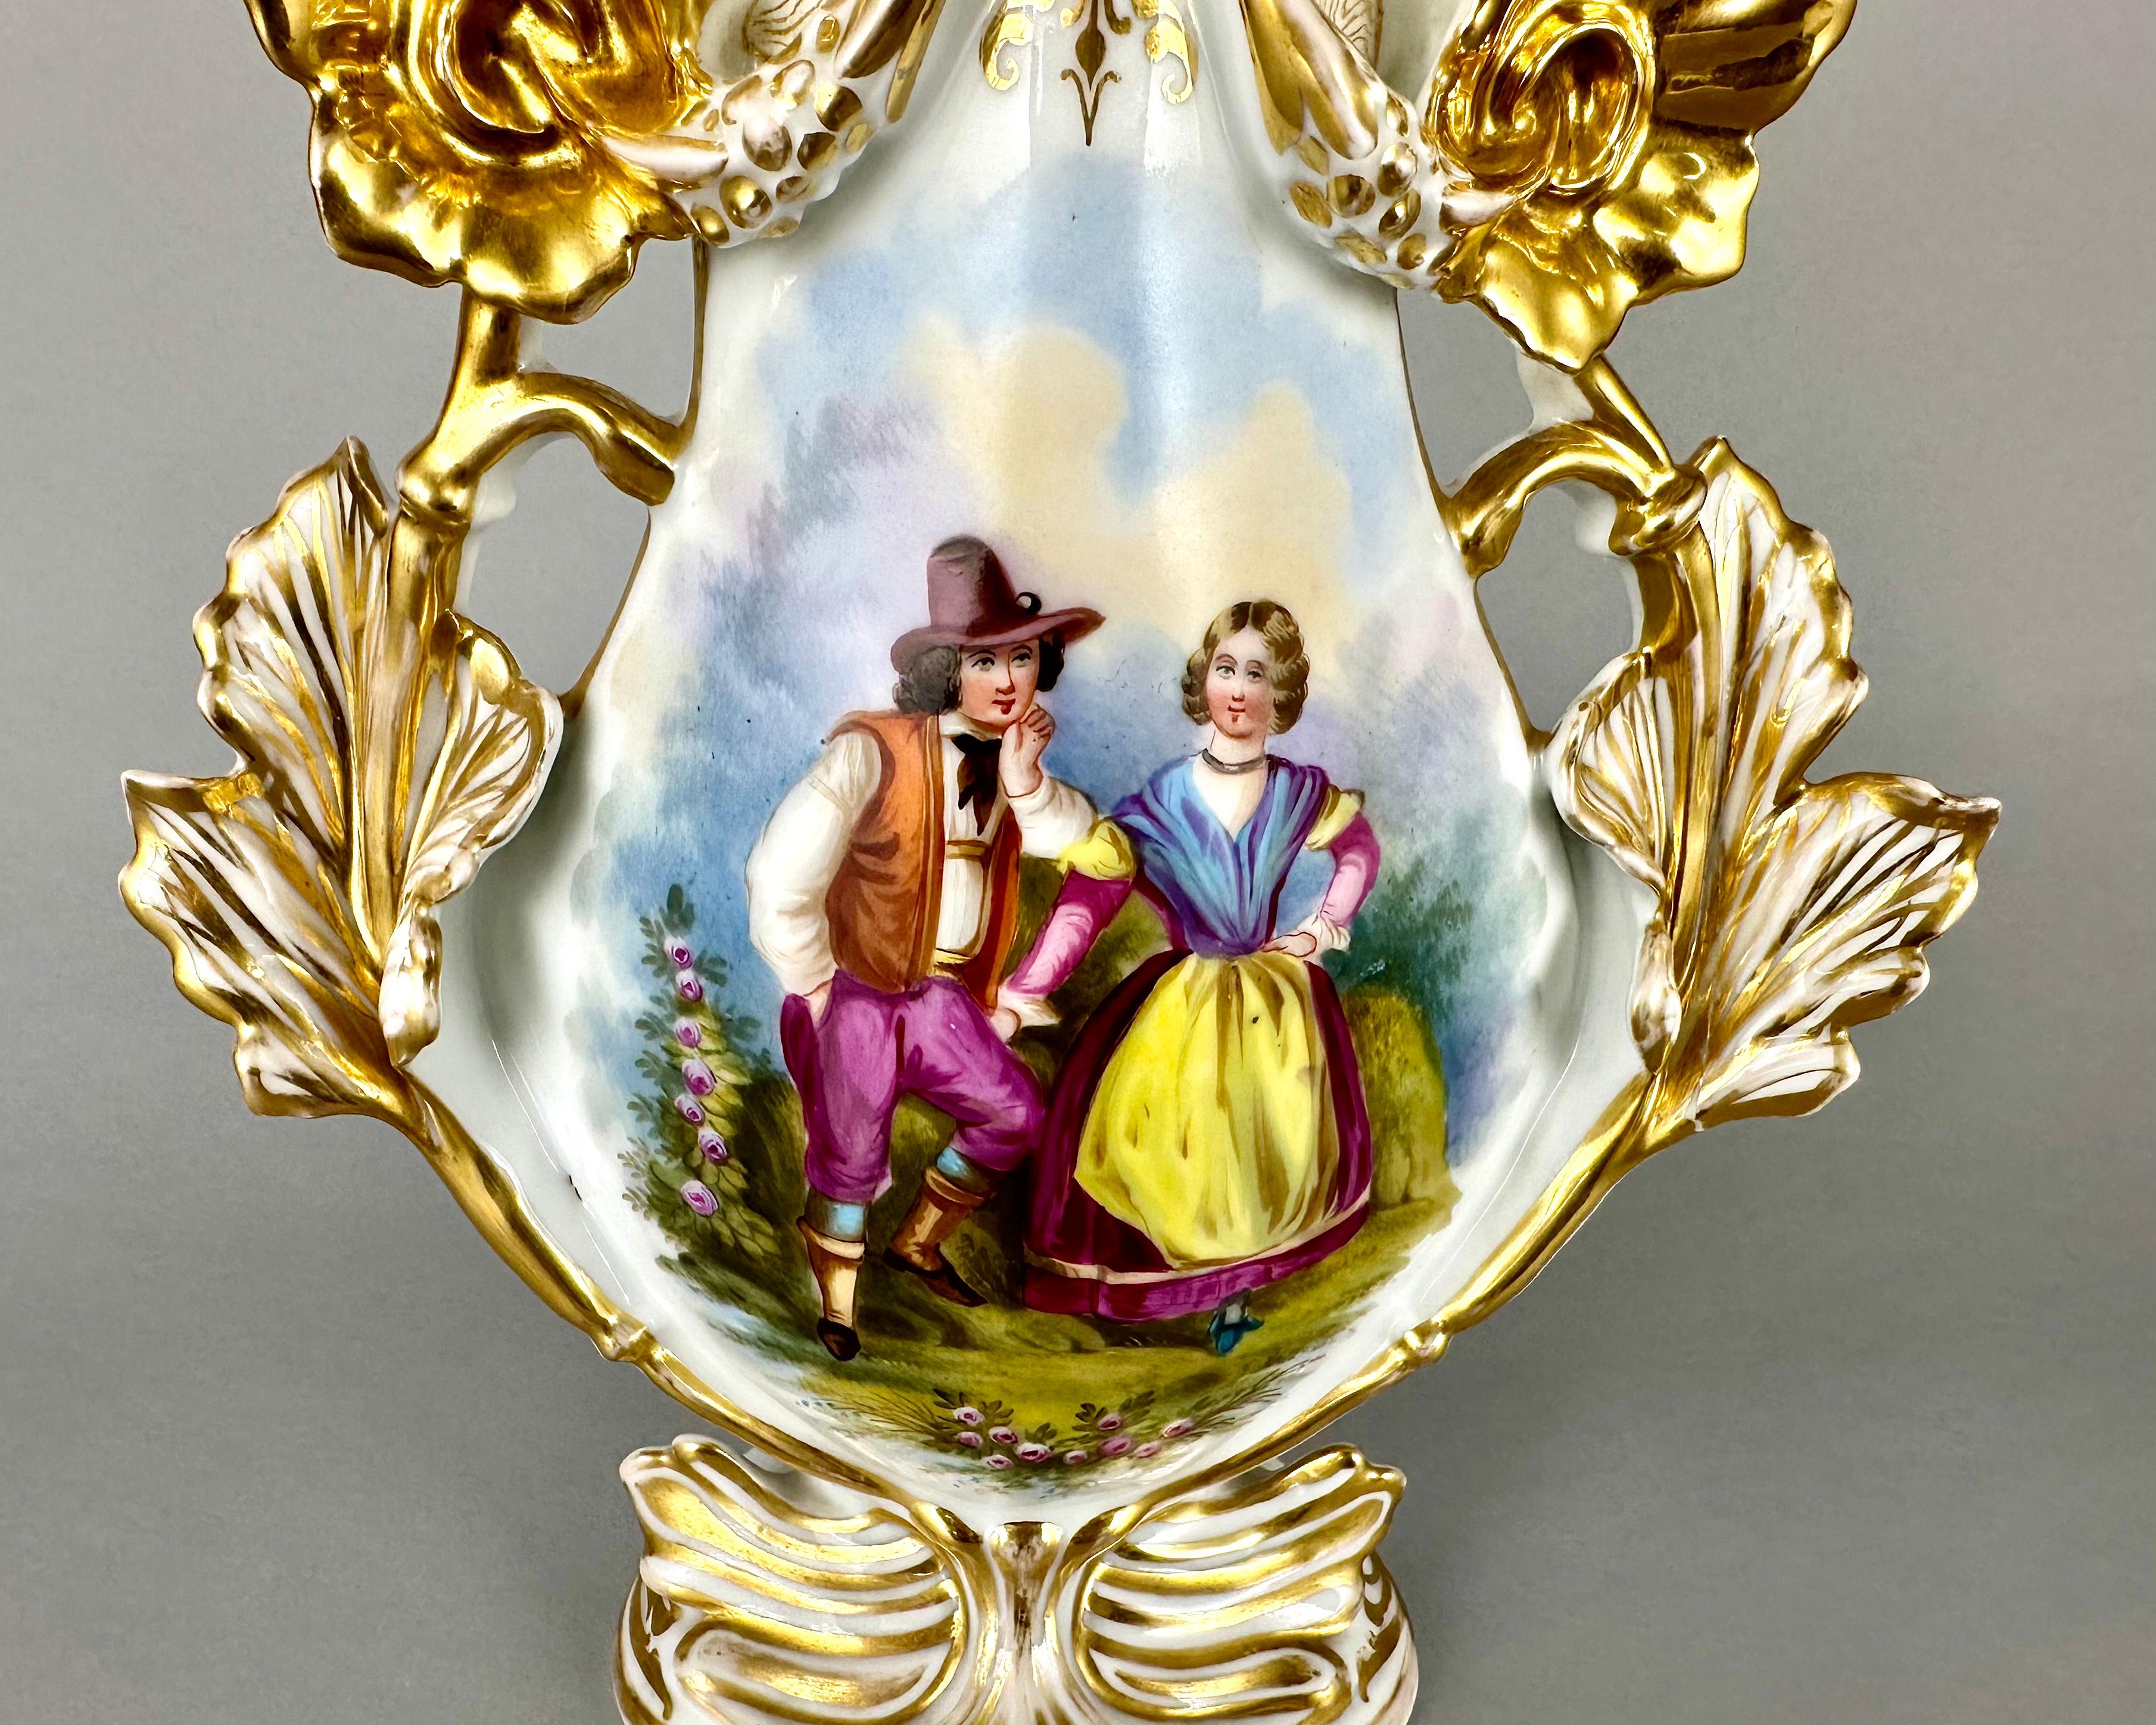 French Vase Antique Old Paris Hand Painted Parisian Romantic Scene France 19th Century For Sale